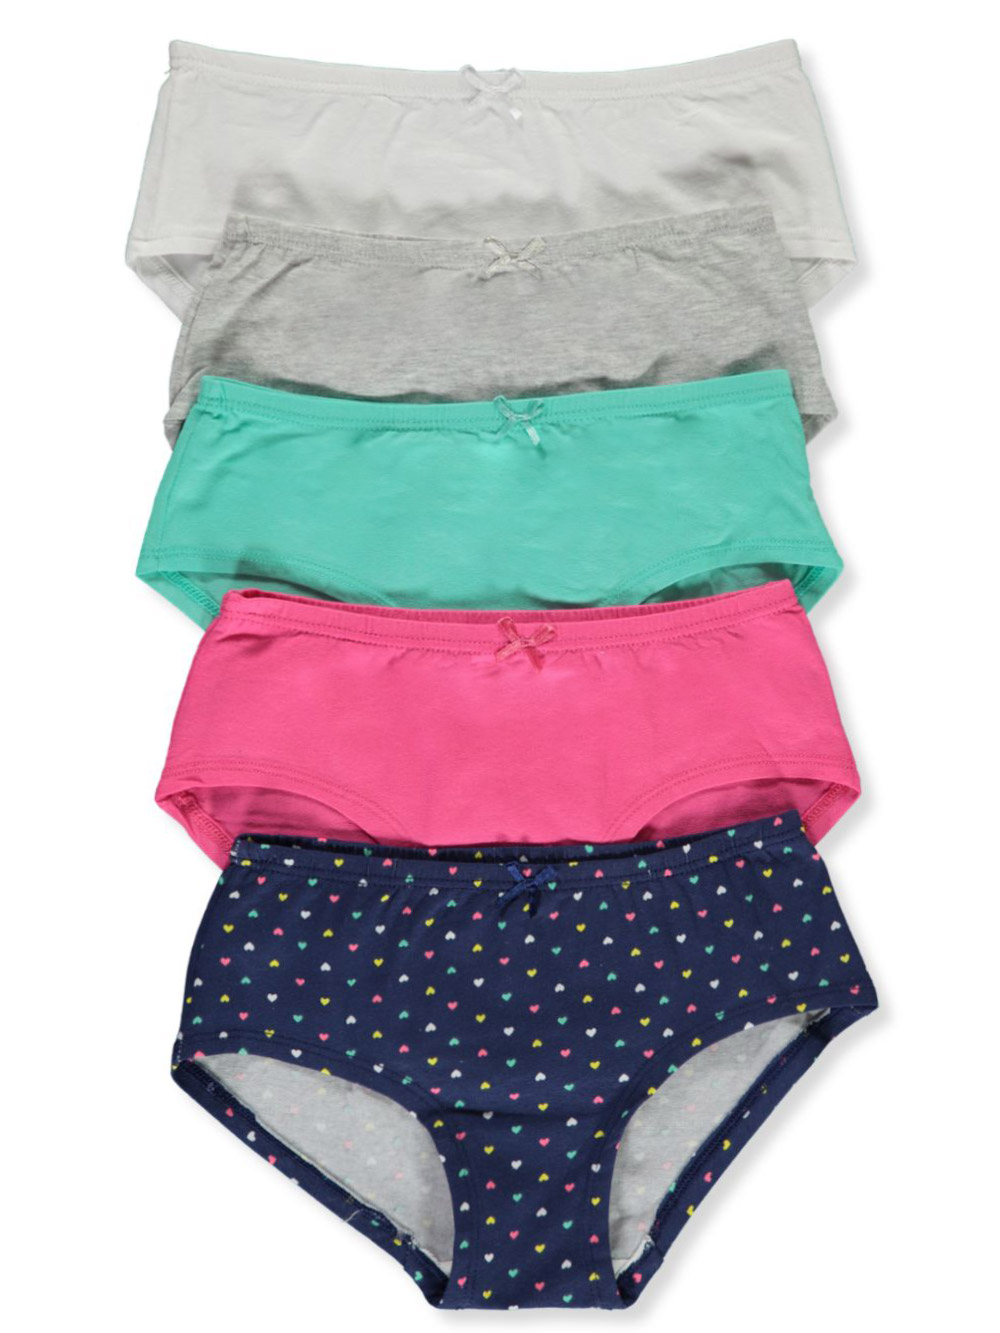 Rene Rofe Girls' 5-Pack Panties  eBay